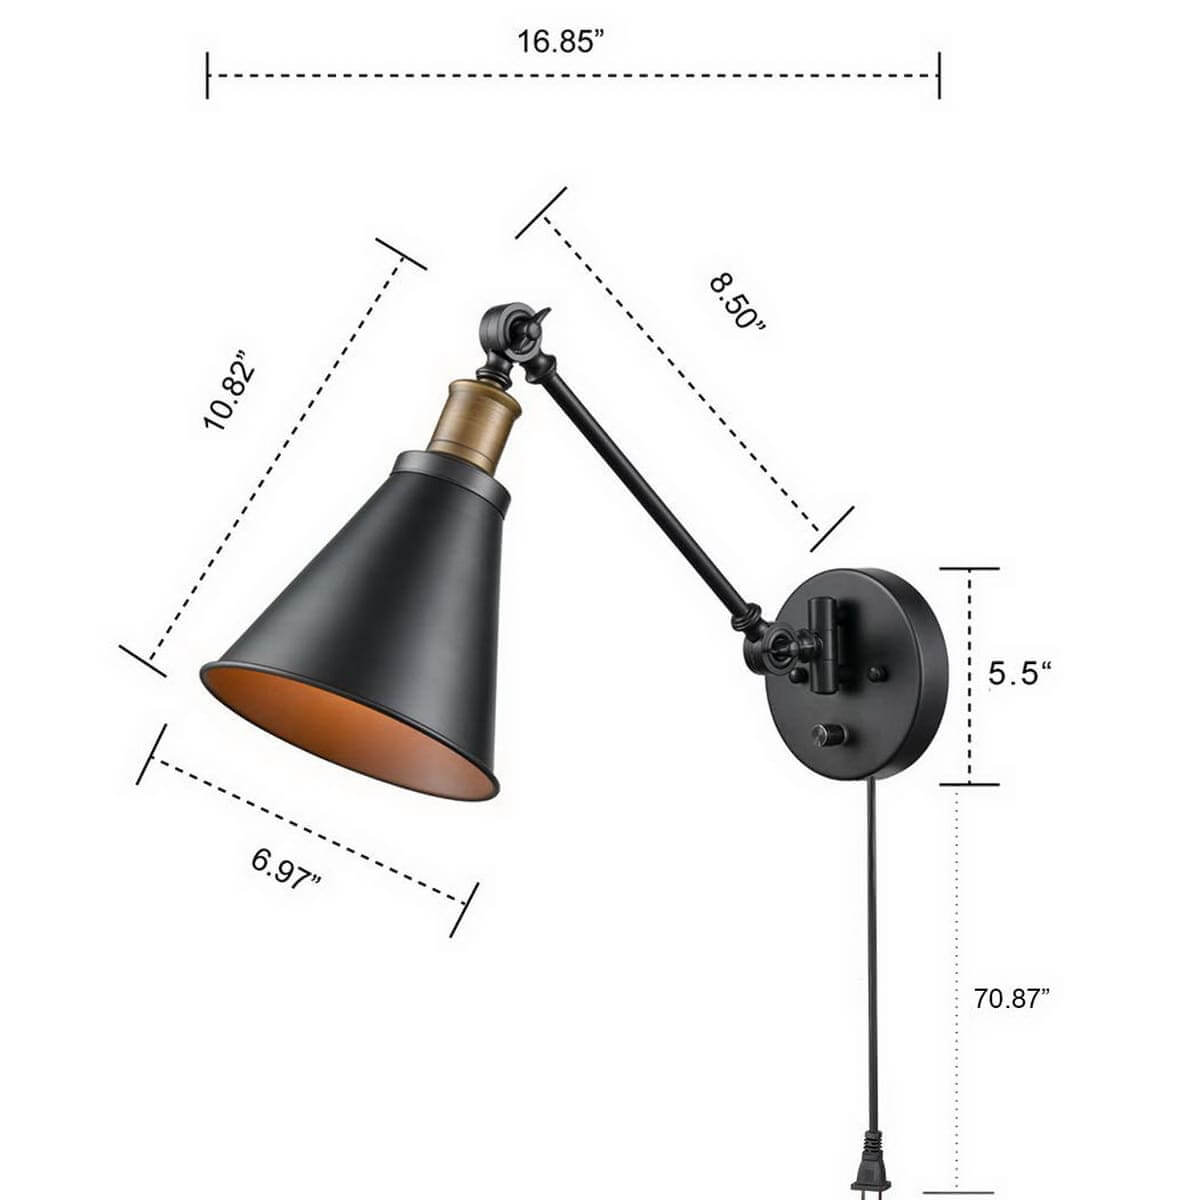 Industrial Black Plug-in Wall Lights Set of 2 Swing Arm Lamps